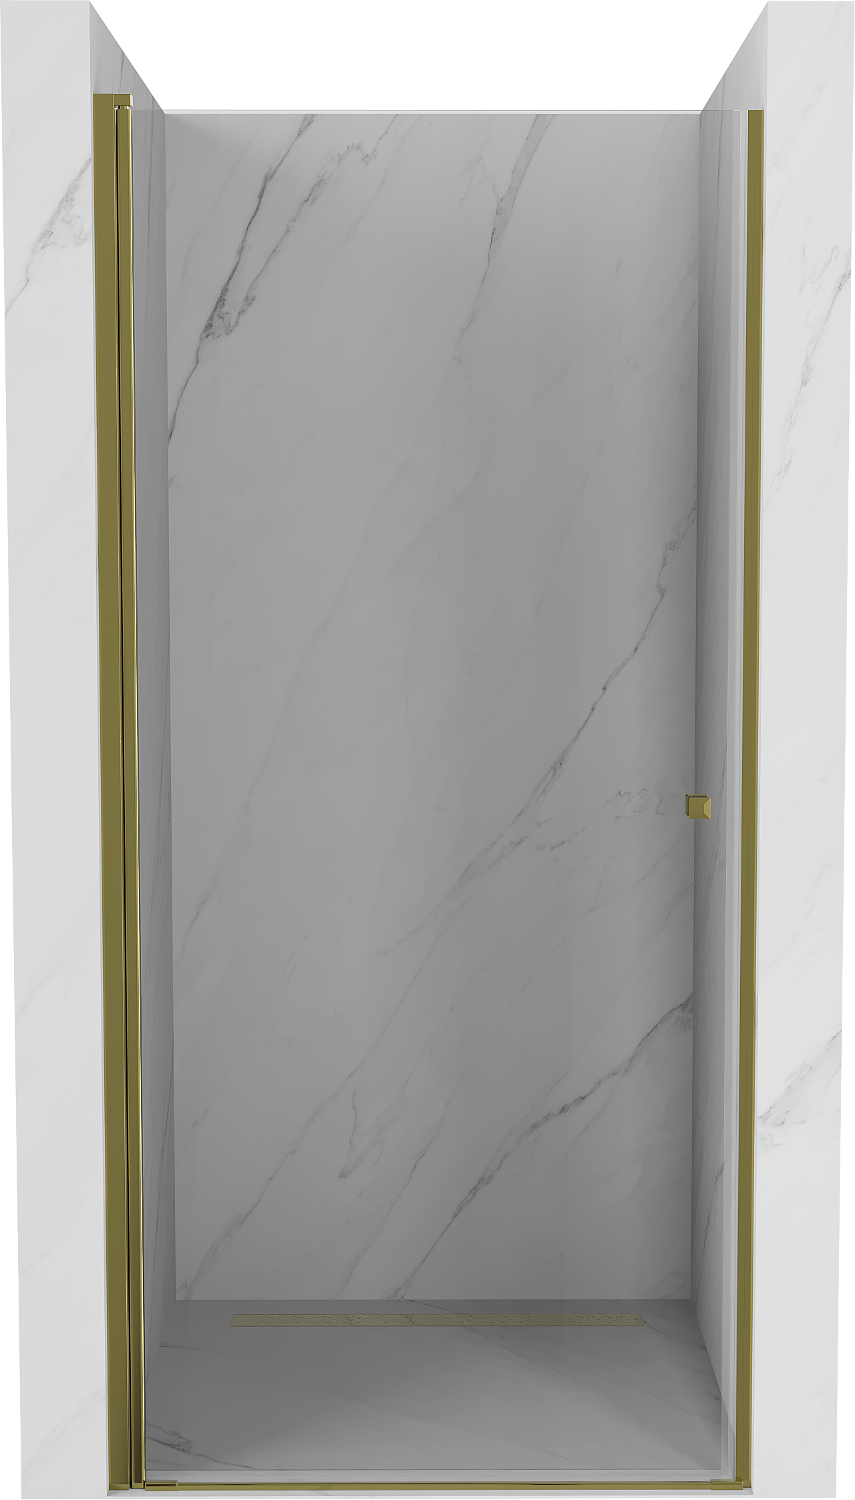 Mexen Pretoria otočné sprchové dveře 100 cm, průhledné, Zlatá - 852-100-000-50-00